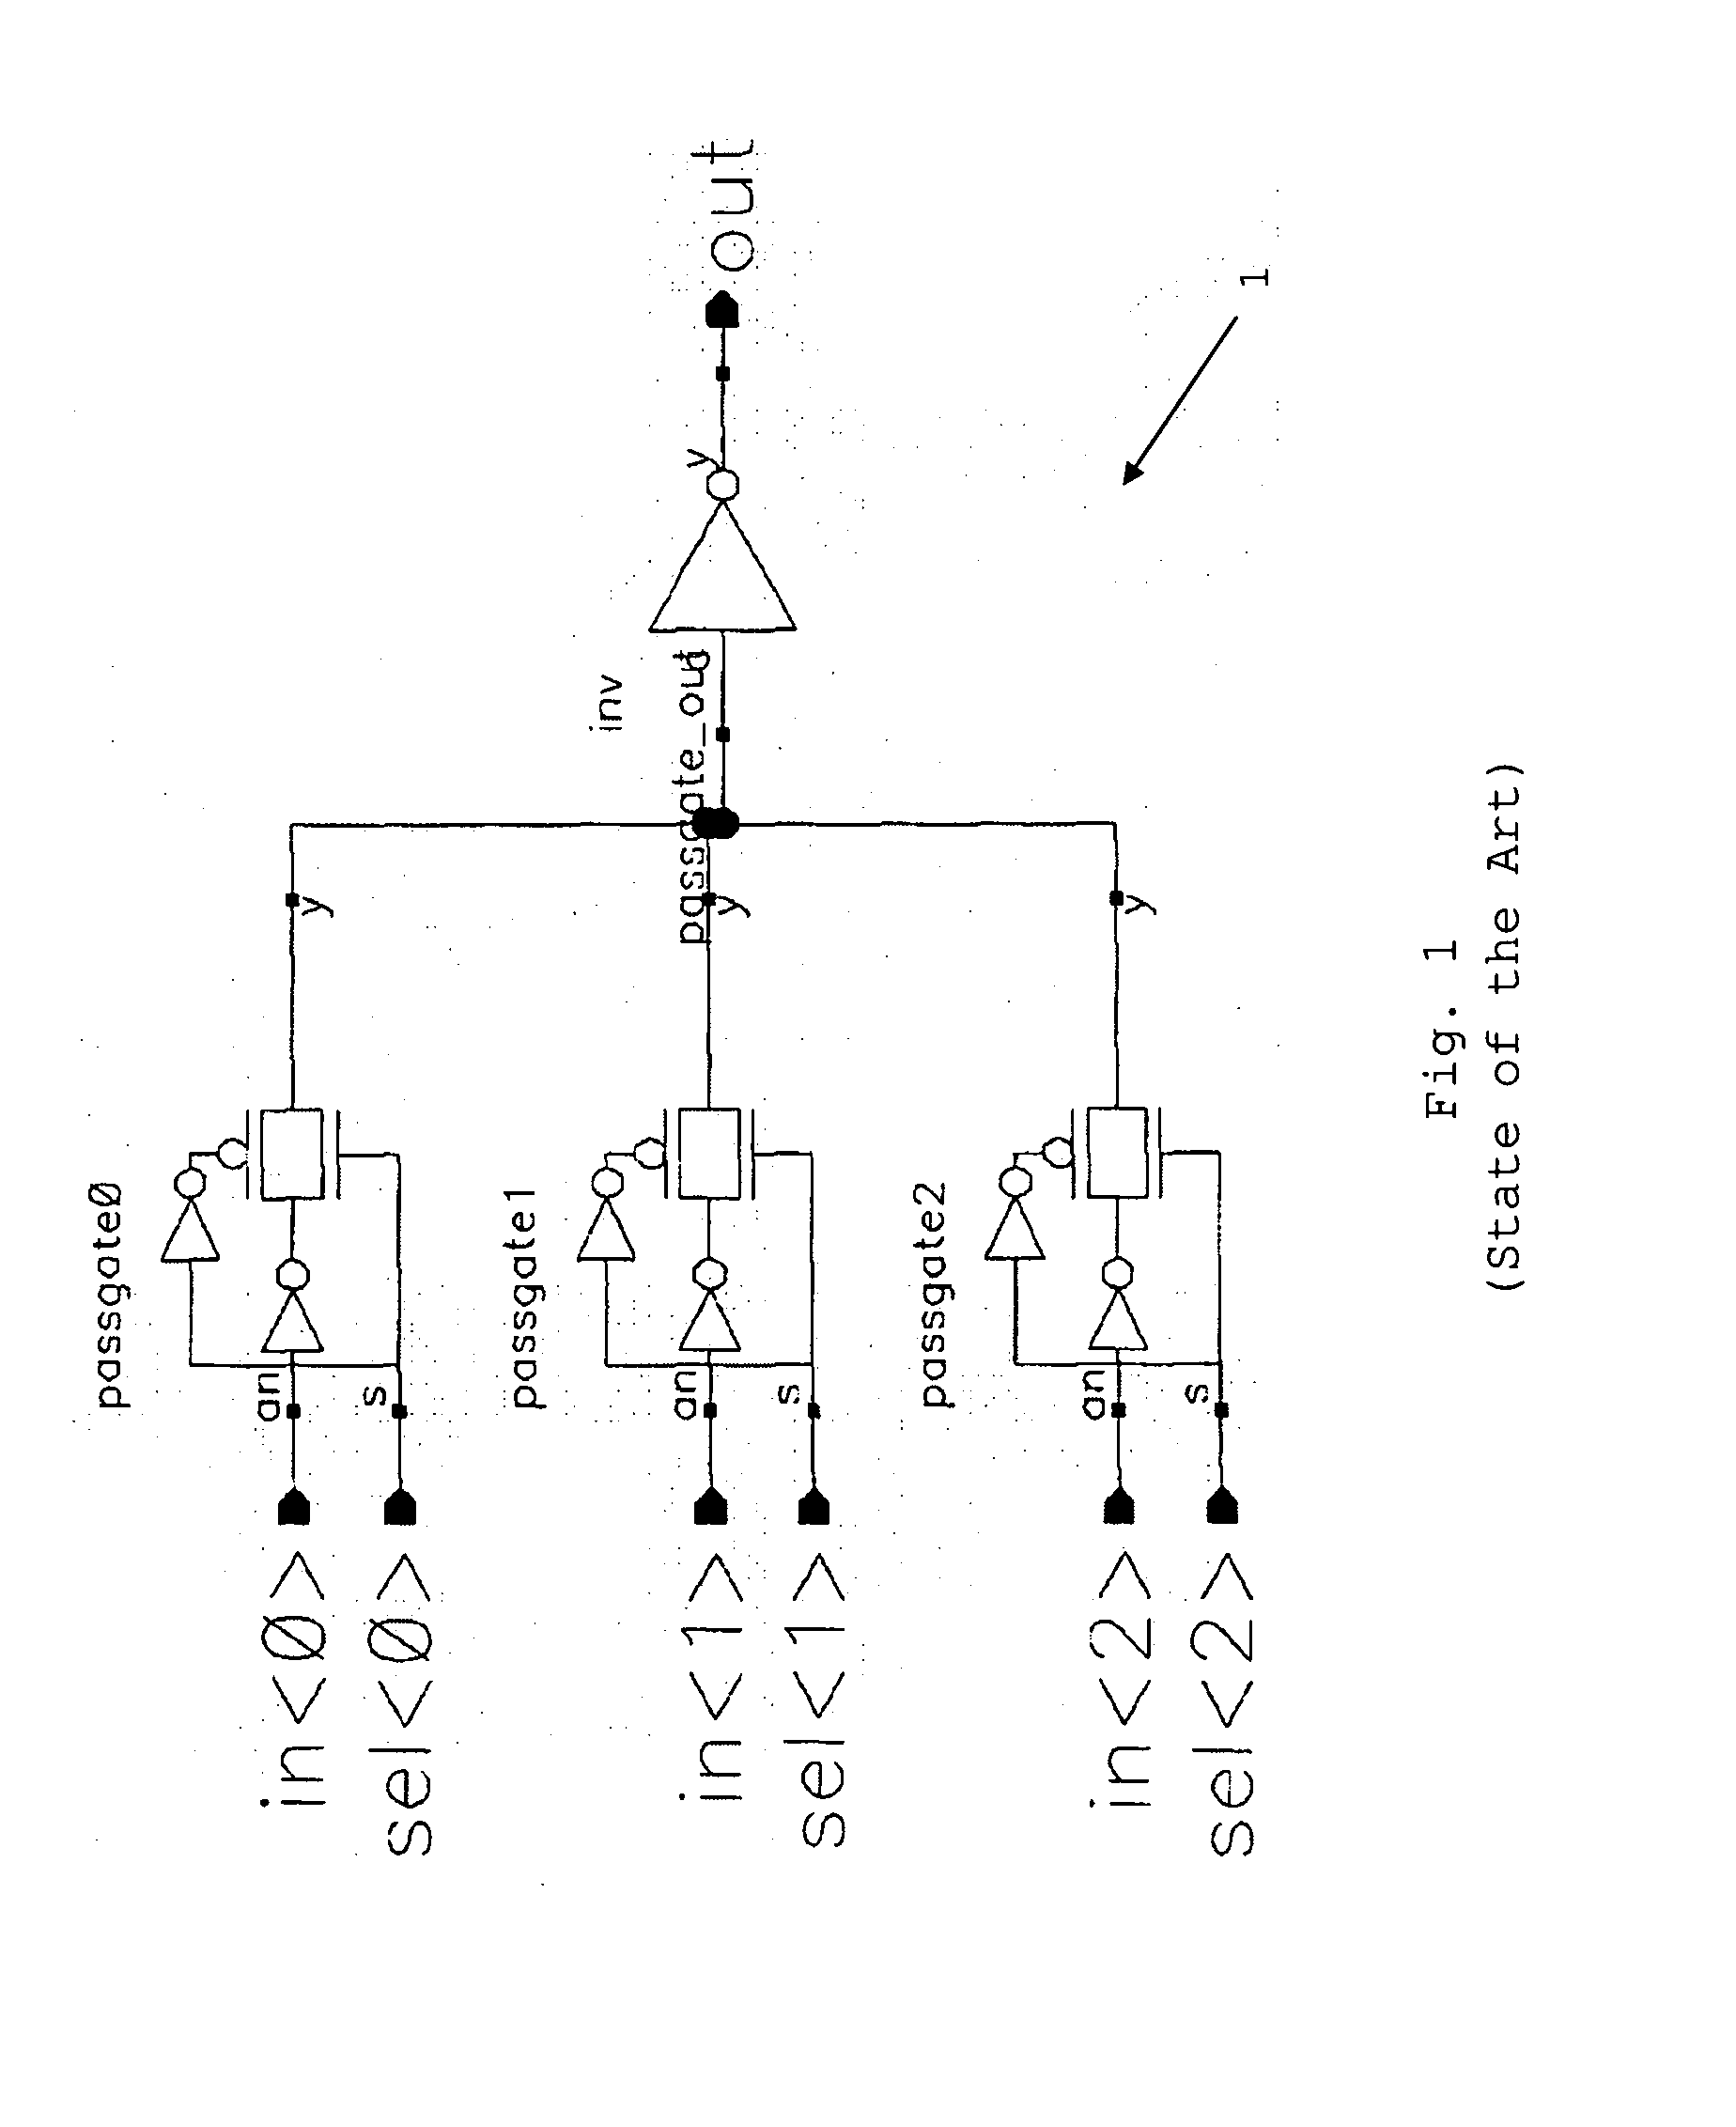 Tri-State Circuit Element Plus Tri-State-Multiplexer Circuitry